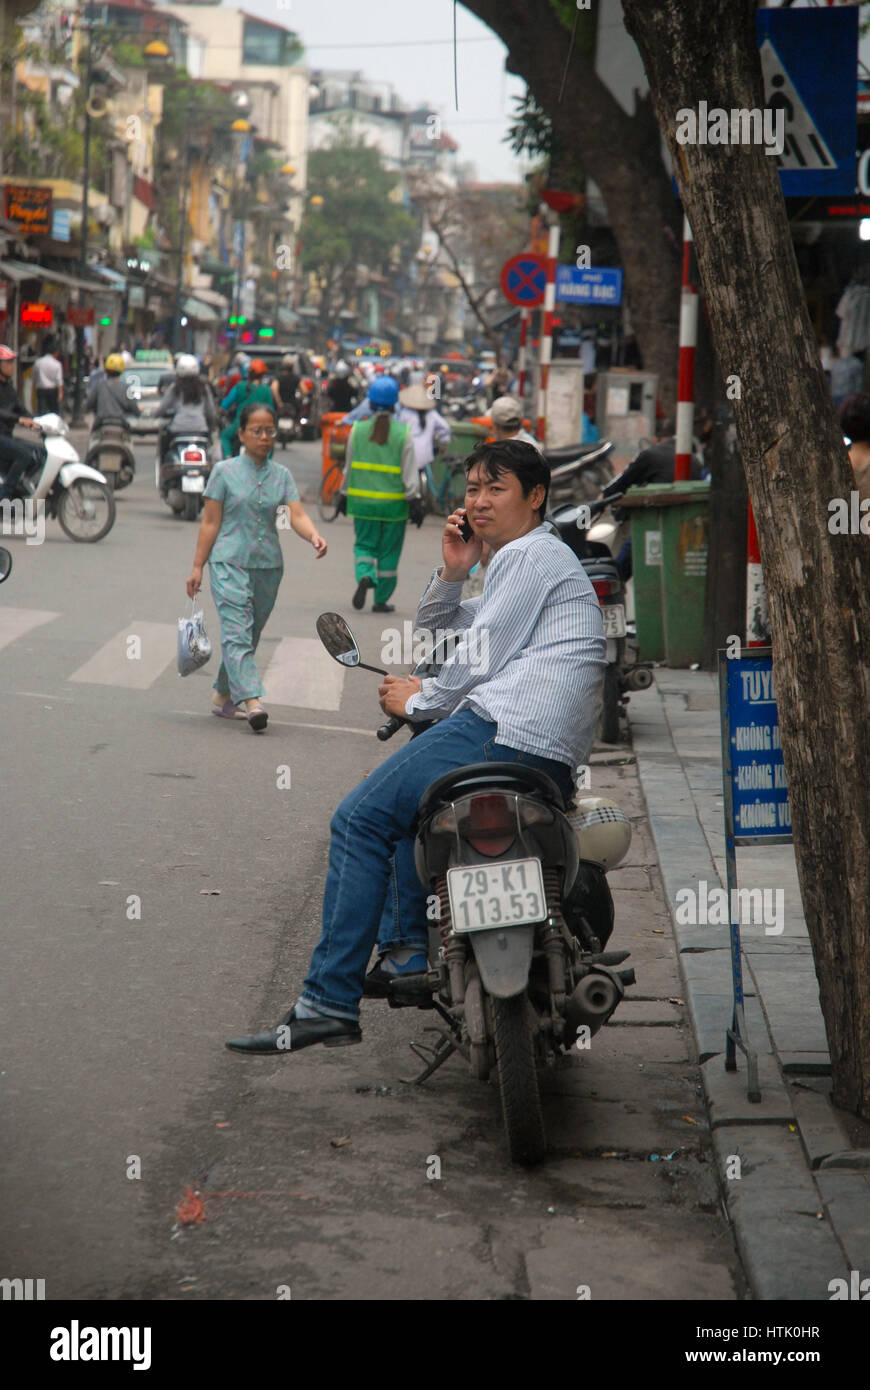 People in the street on their motorbikes, Hanoi, Vietnam. Stock Photo